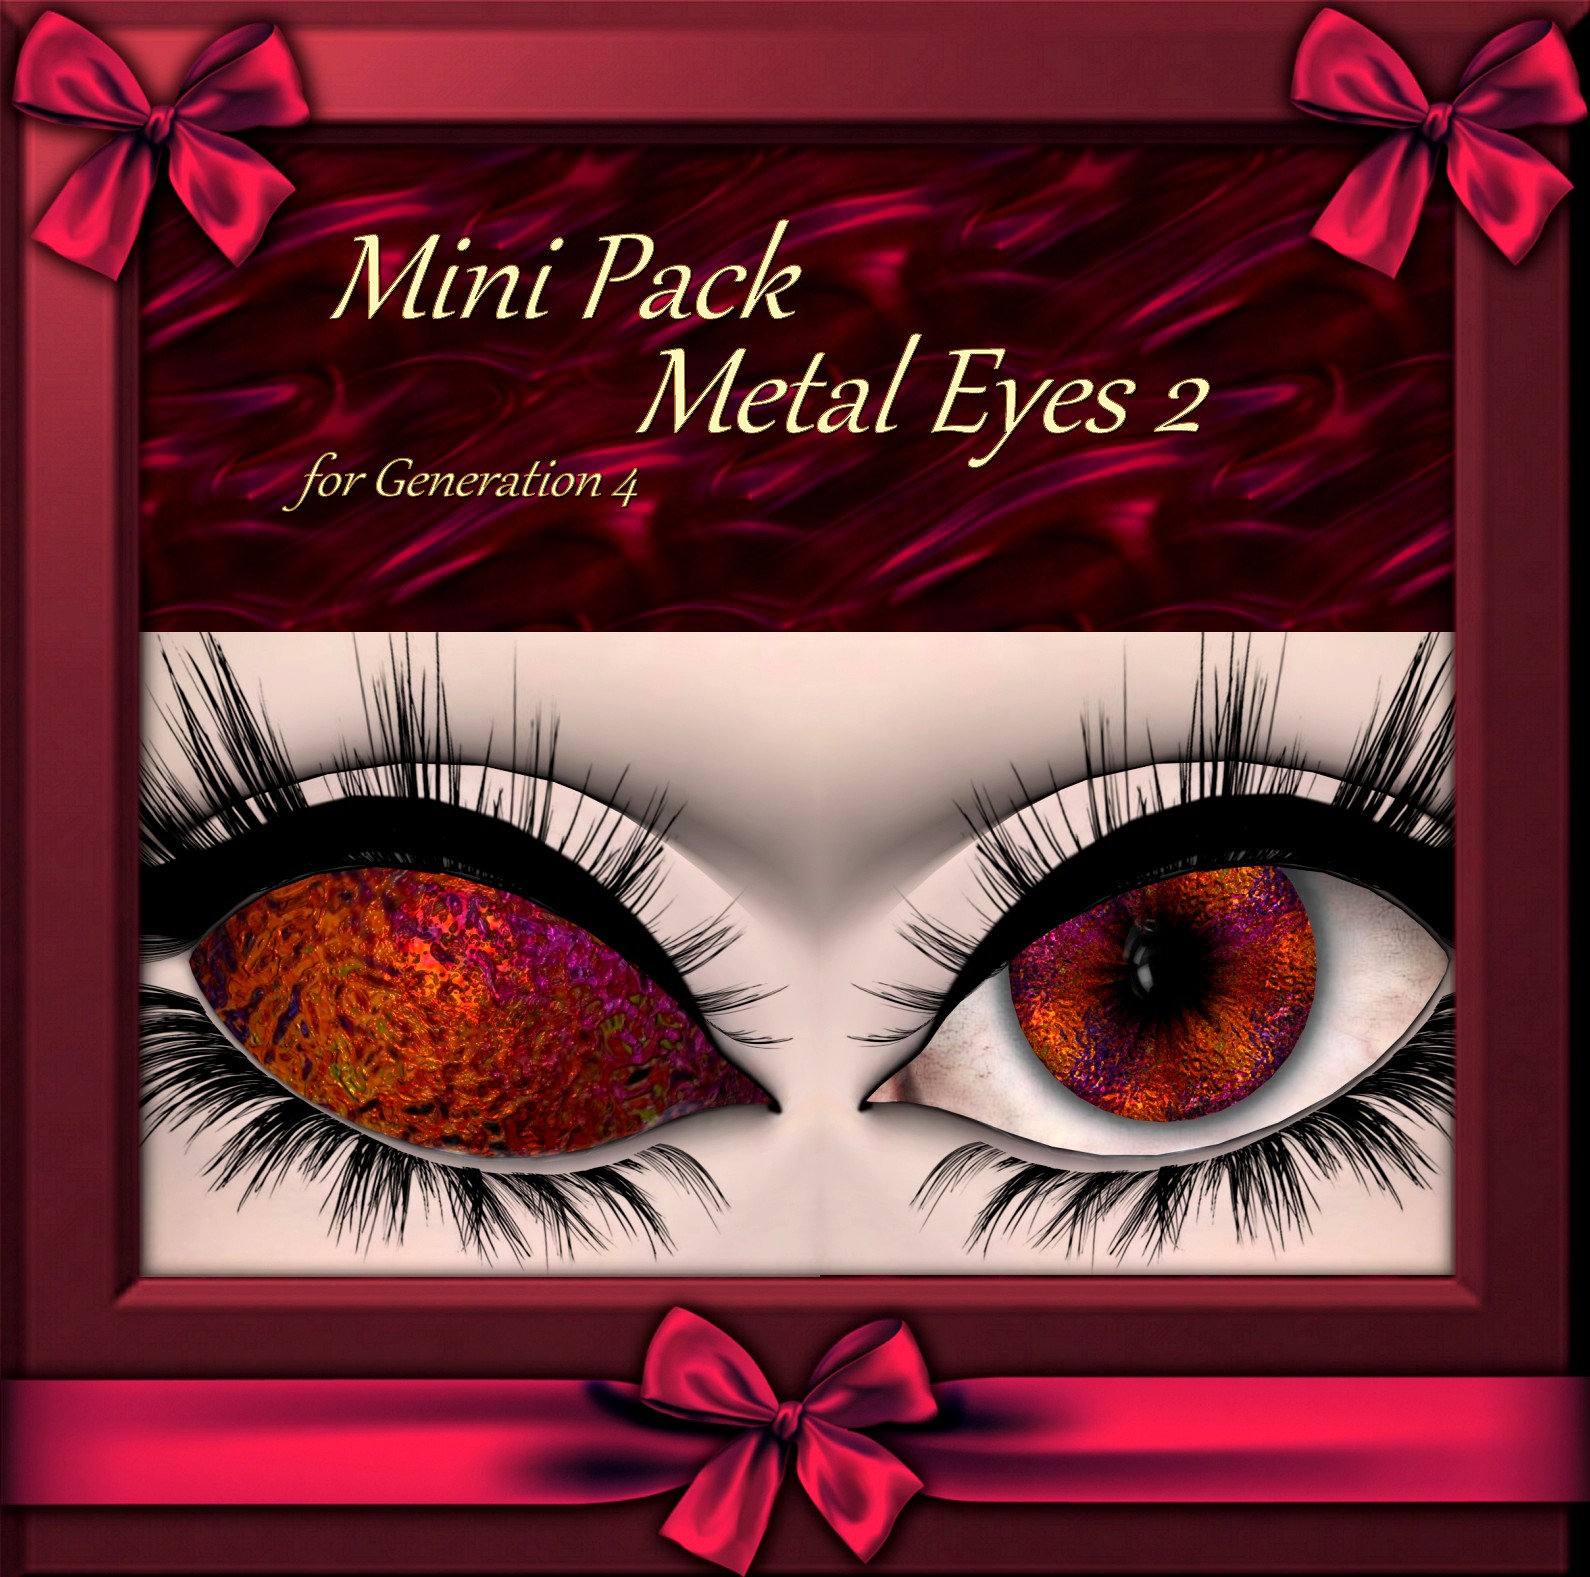 Mini Pack : Metal Eyes 2 for Generation 4